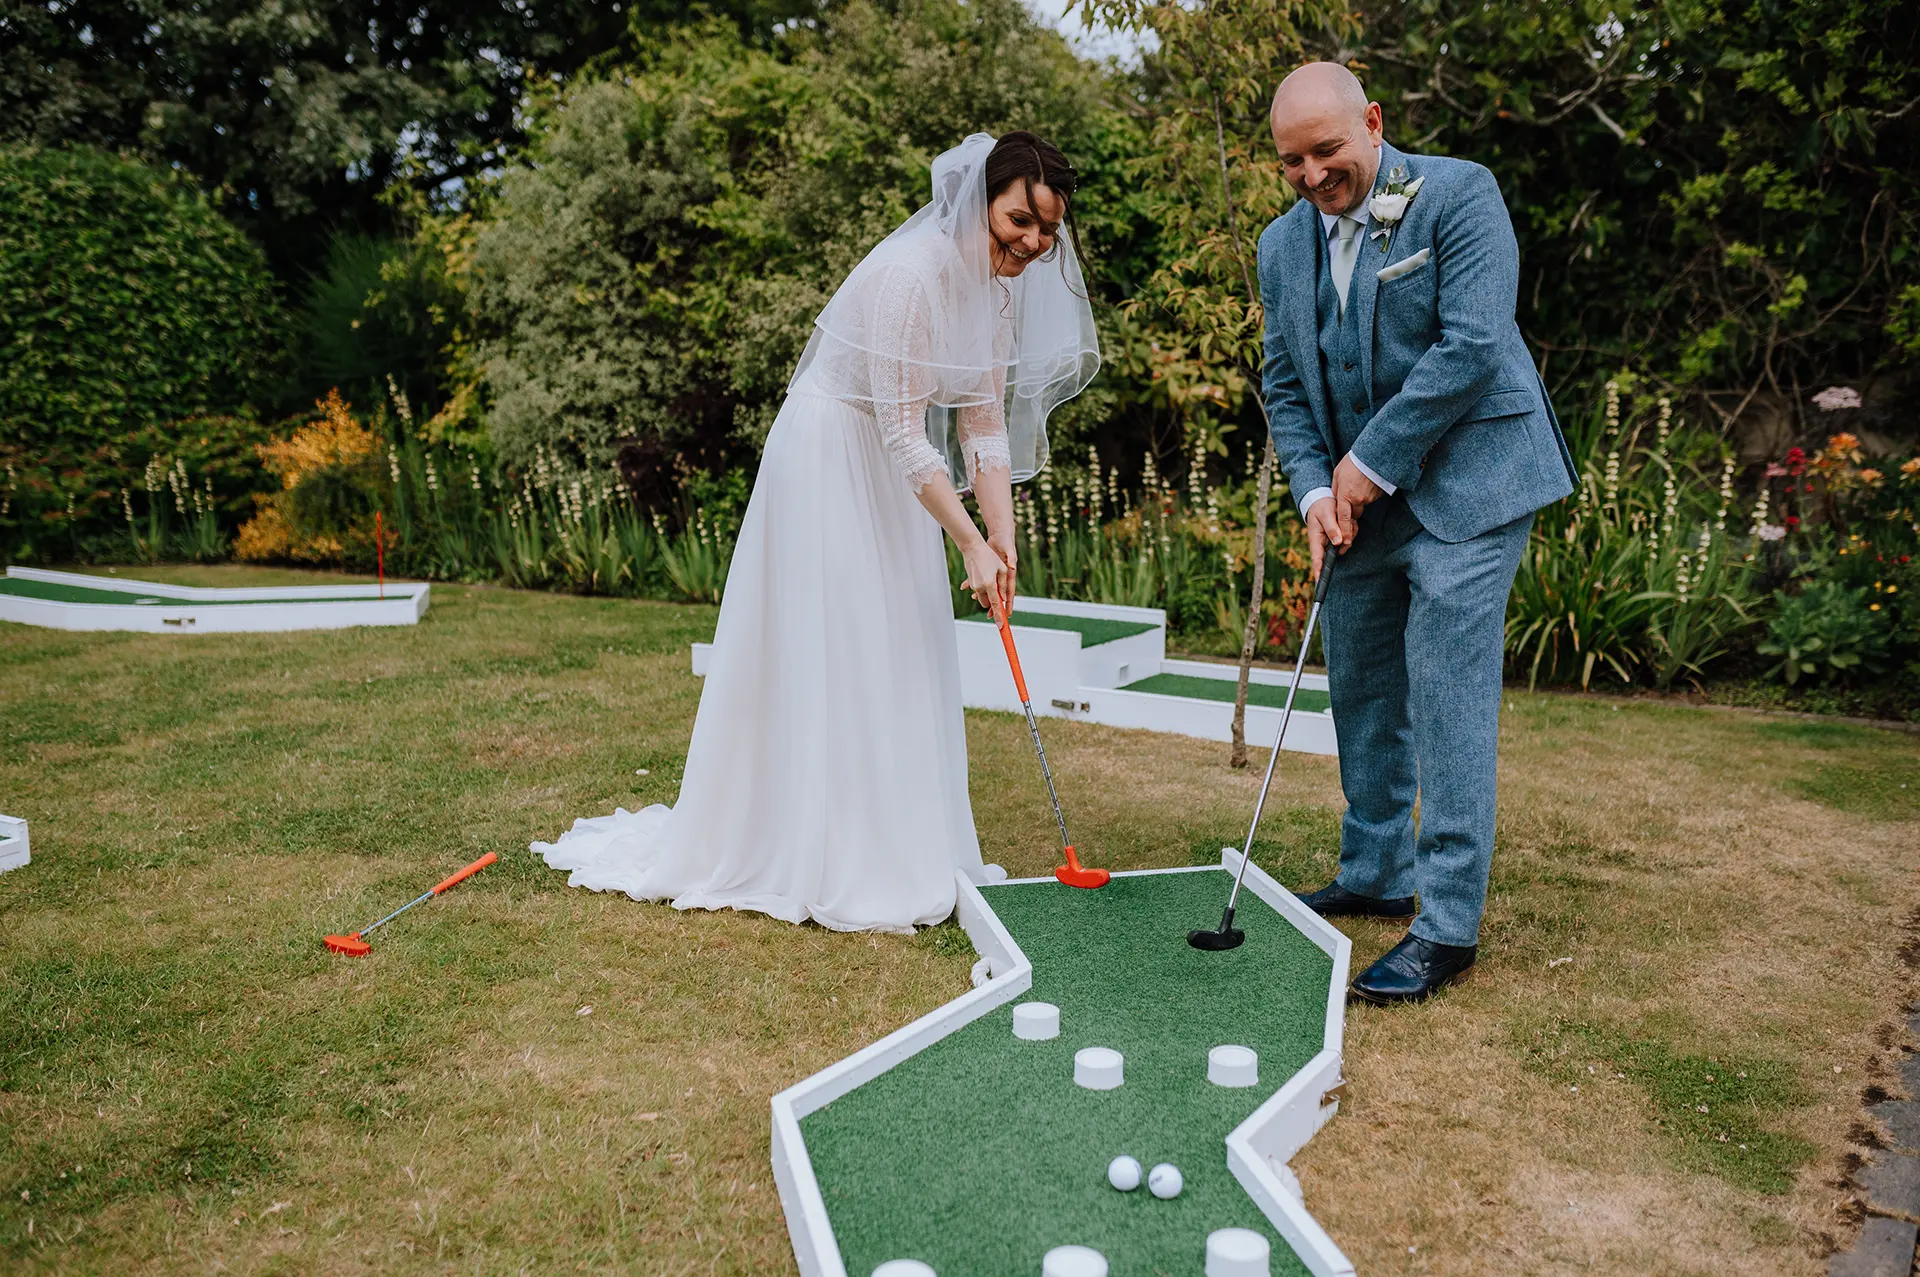 Curradine Barns wedding entertainment blog crazy golf bride and groom